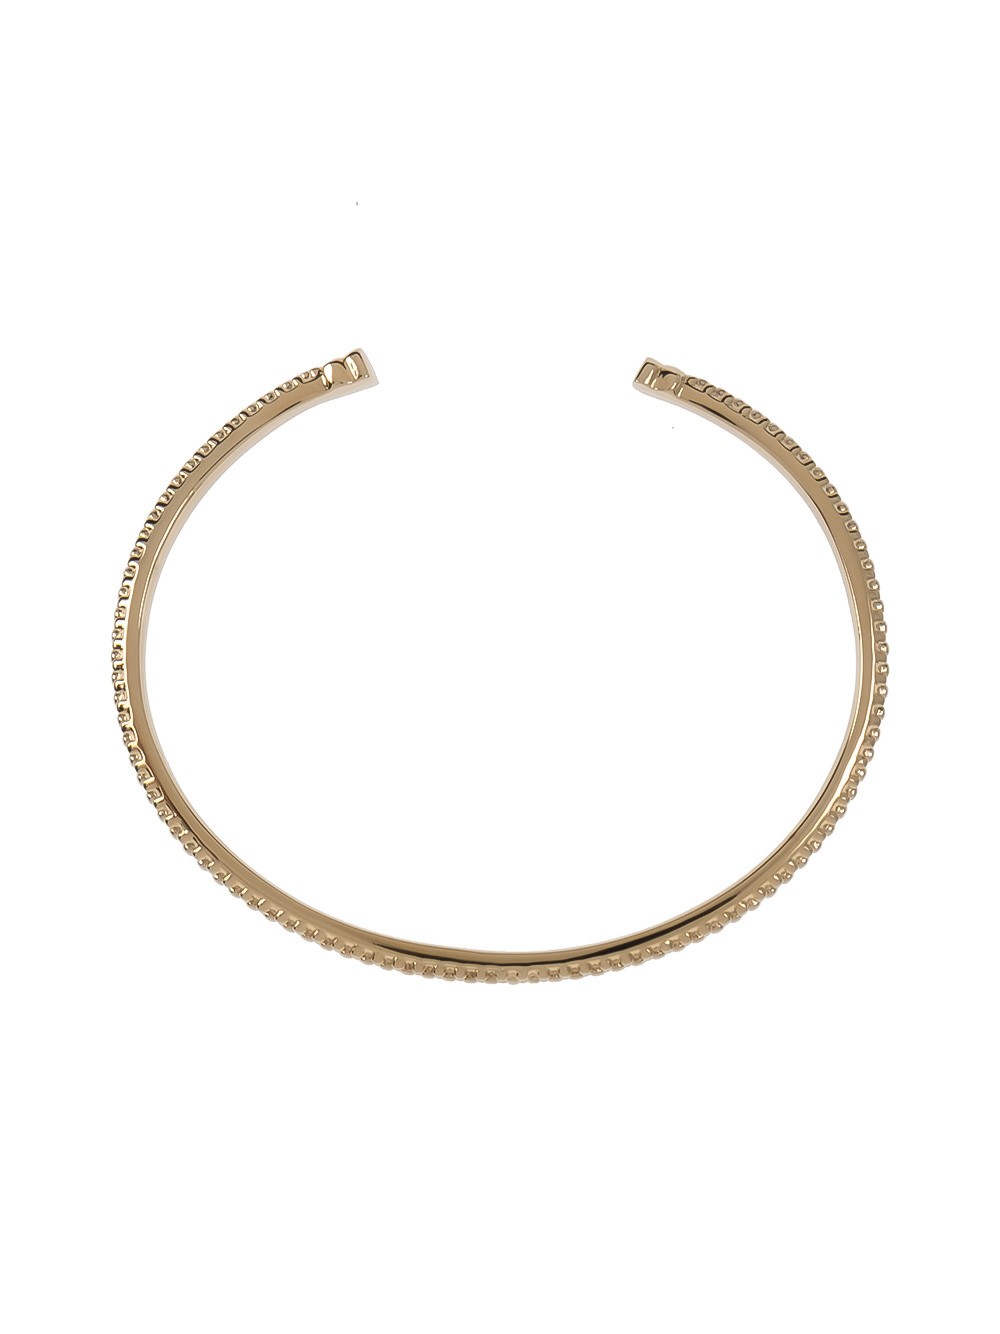 CROCO GOLD - Bettencourt Creative Jewellery